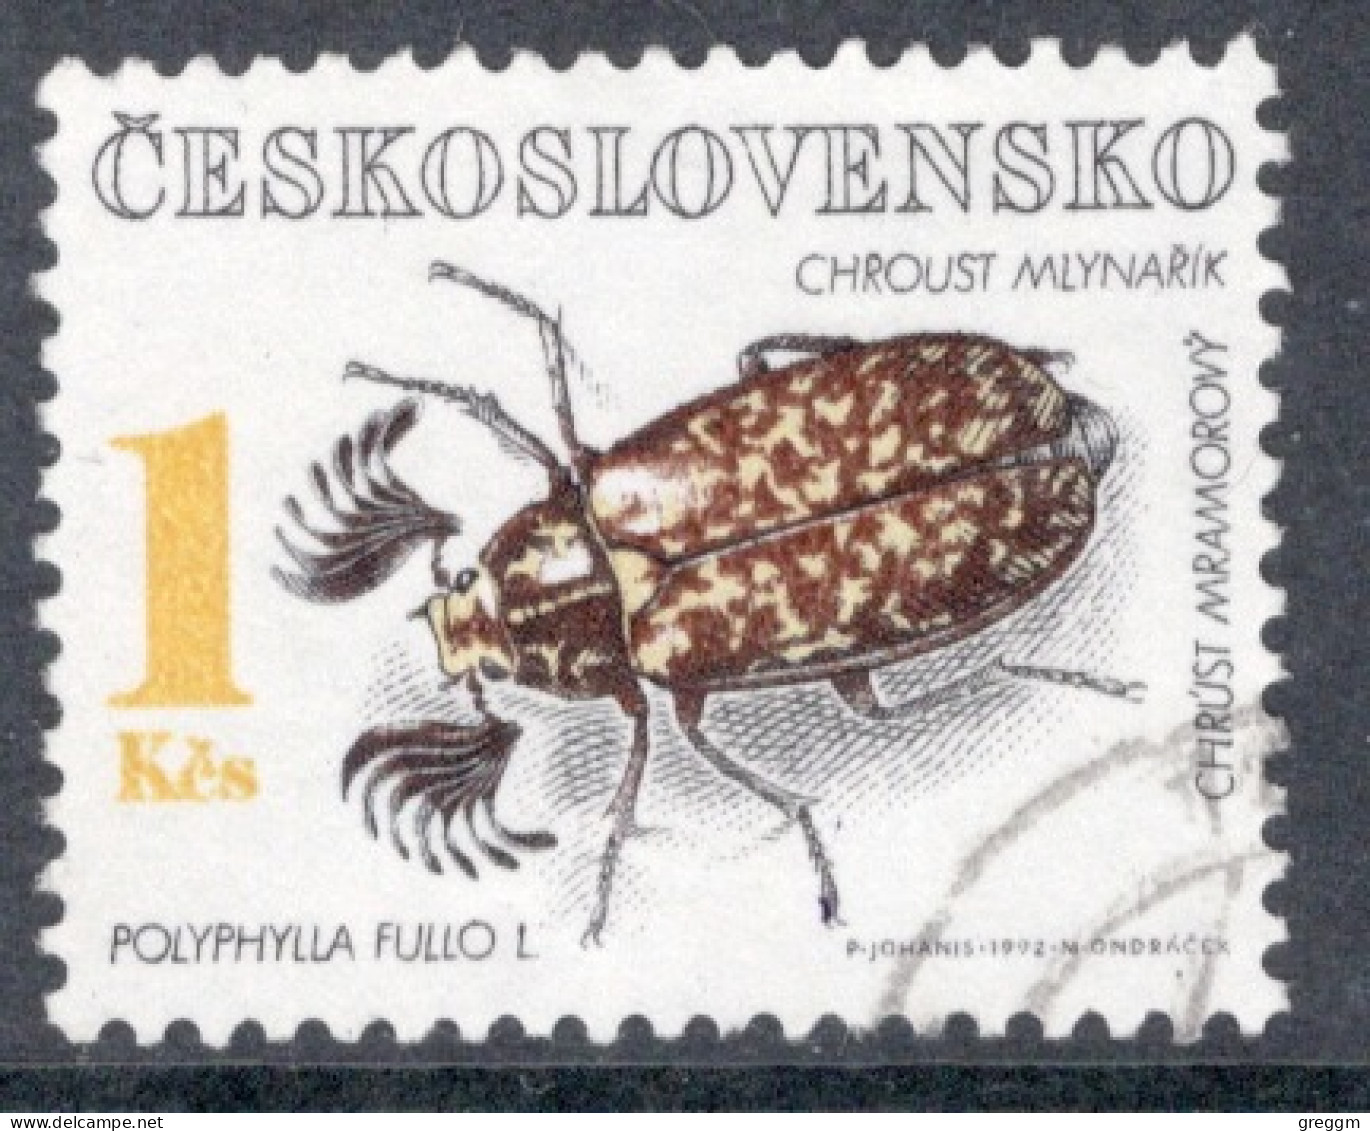 Czechoslovakia 1992 Single Stamp Beetles In Fine Used - Oblitérés